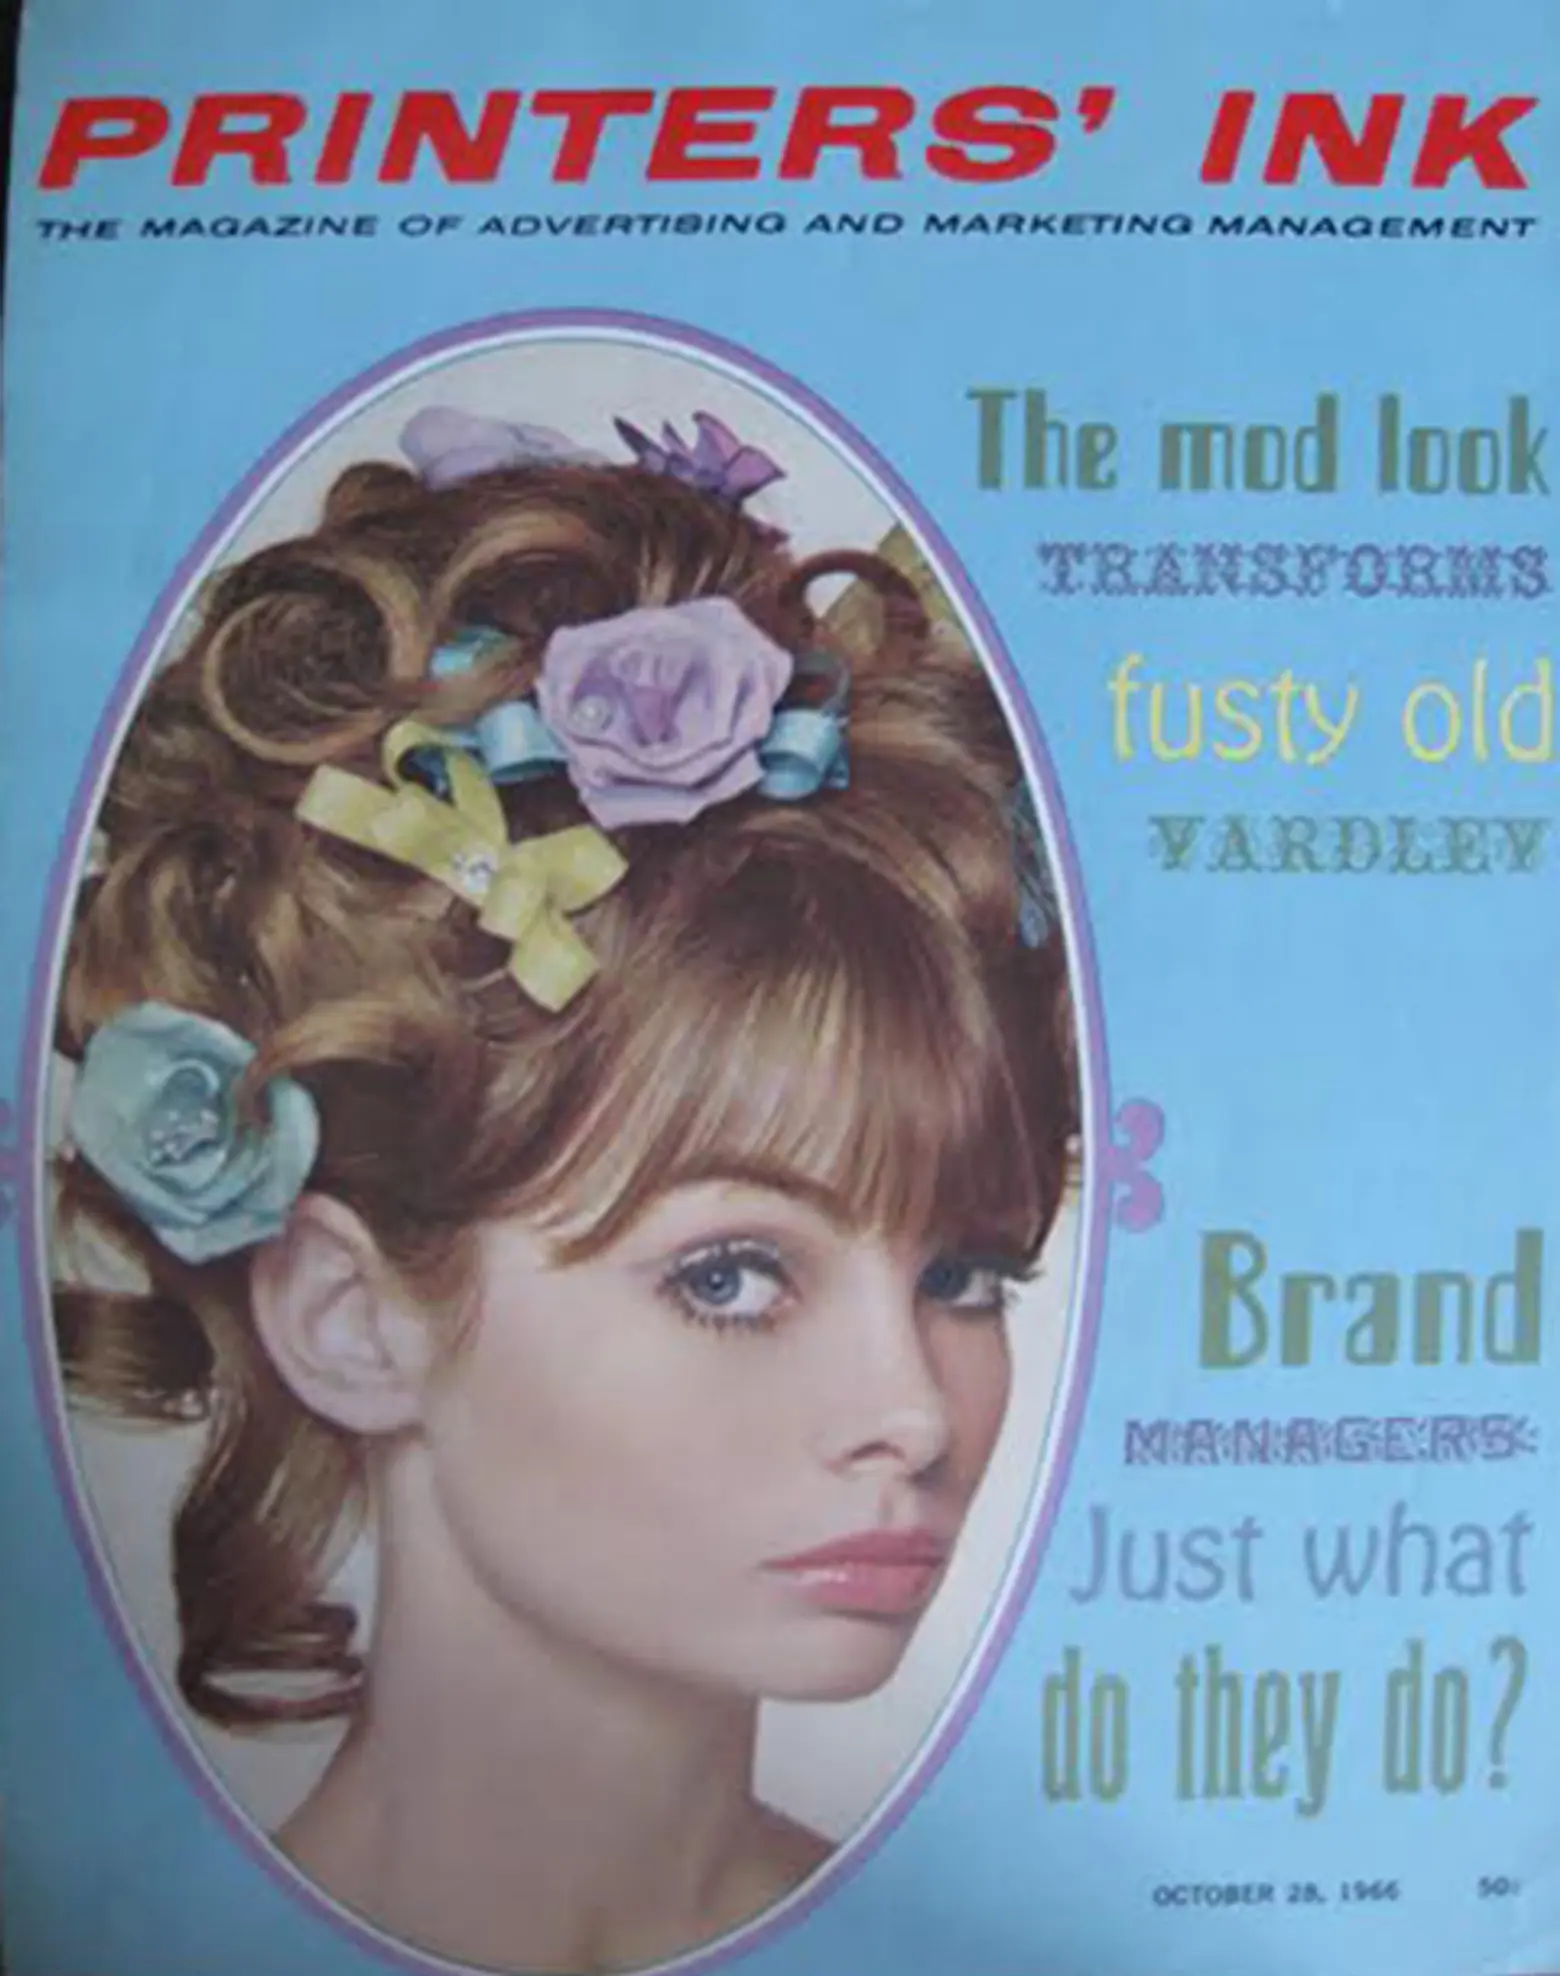 Printers' Ink magazine, 1960s advertising